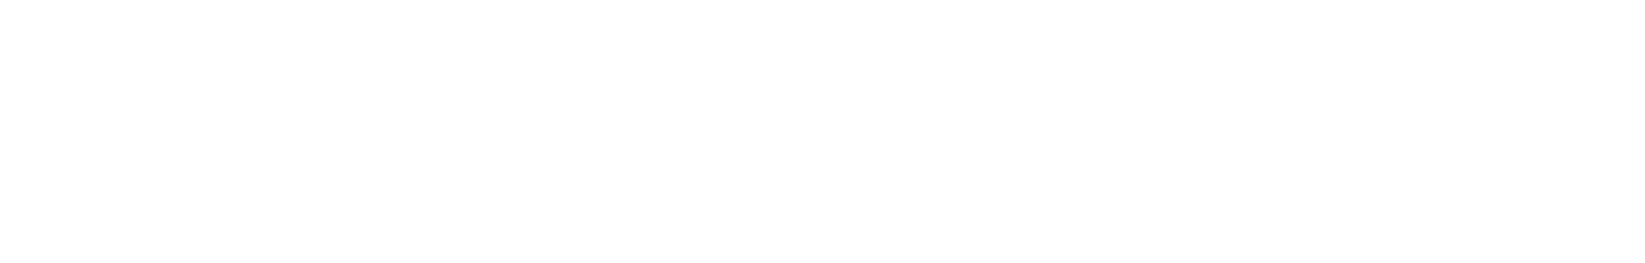 Logoschriftzug Fraport x MOMEM